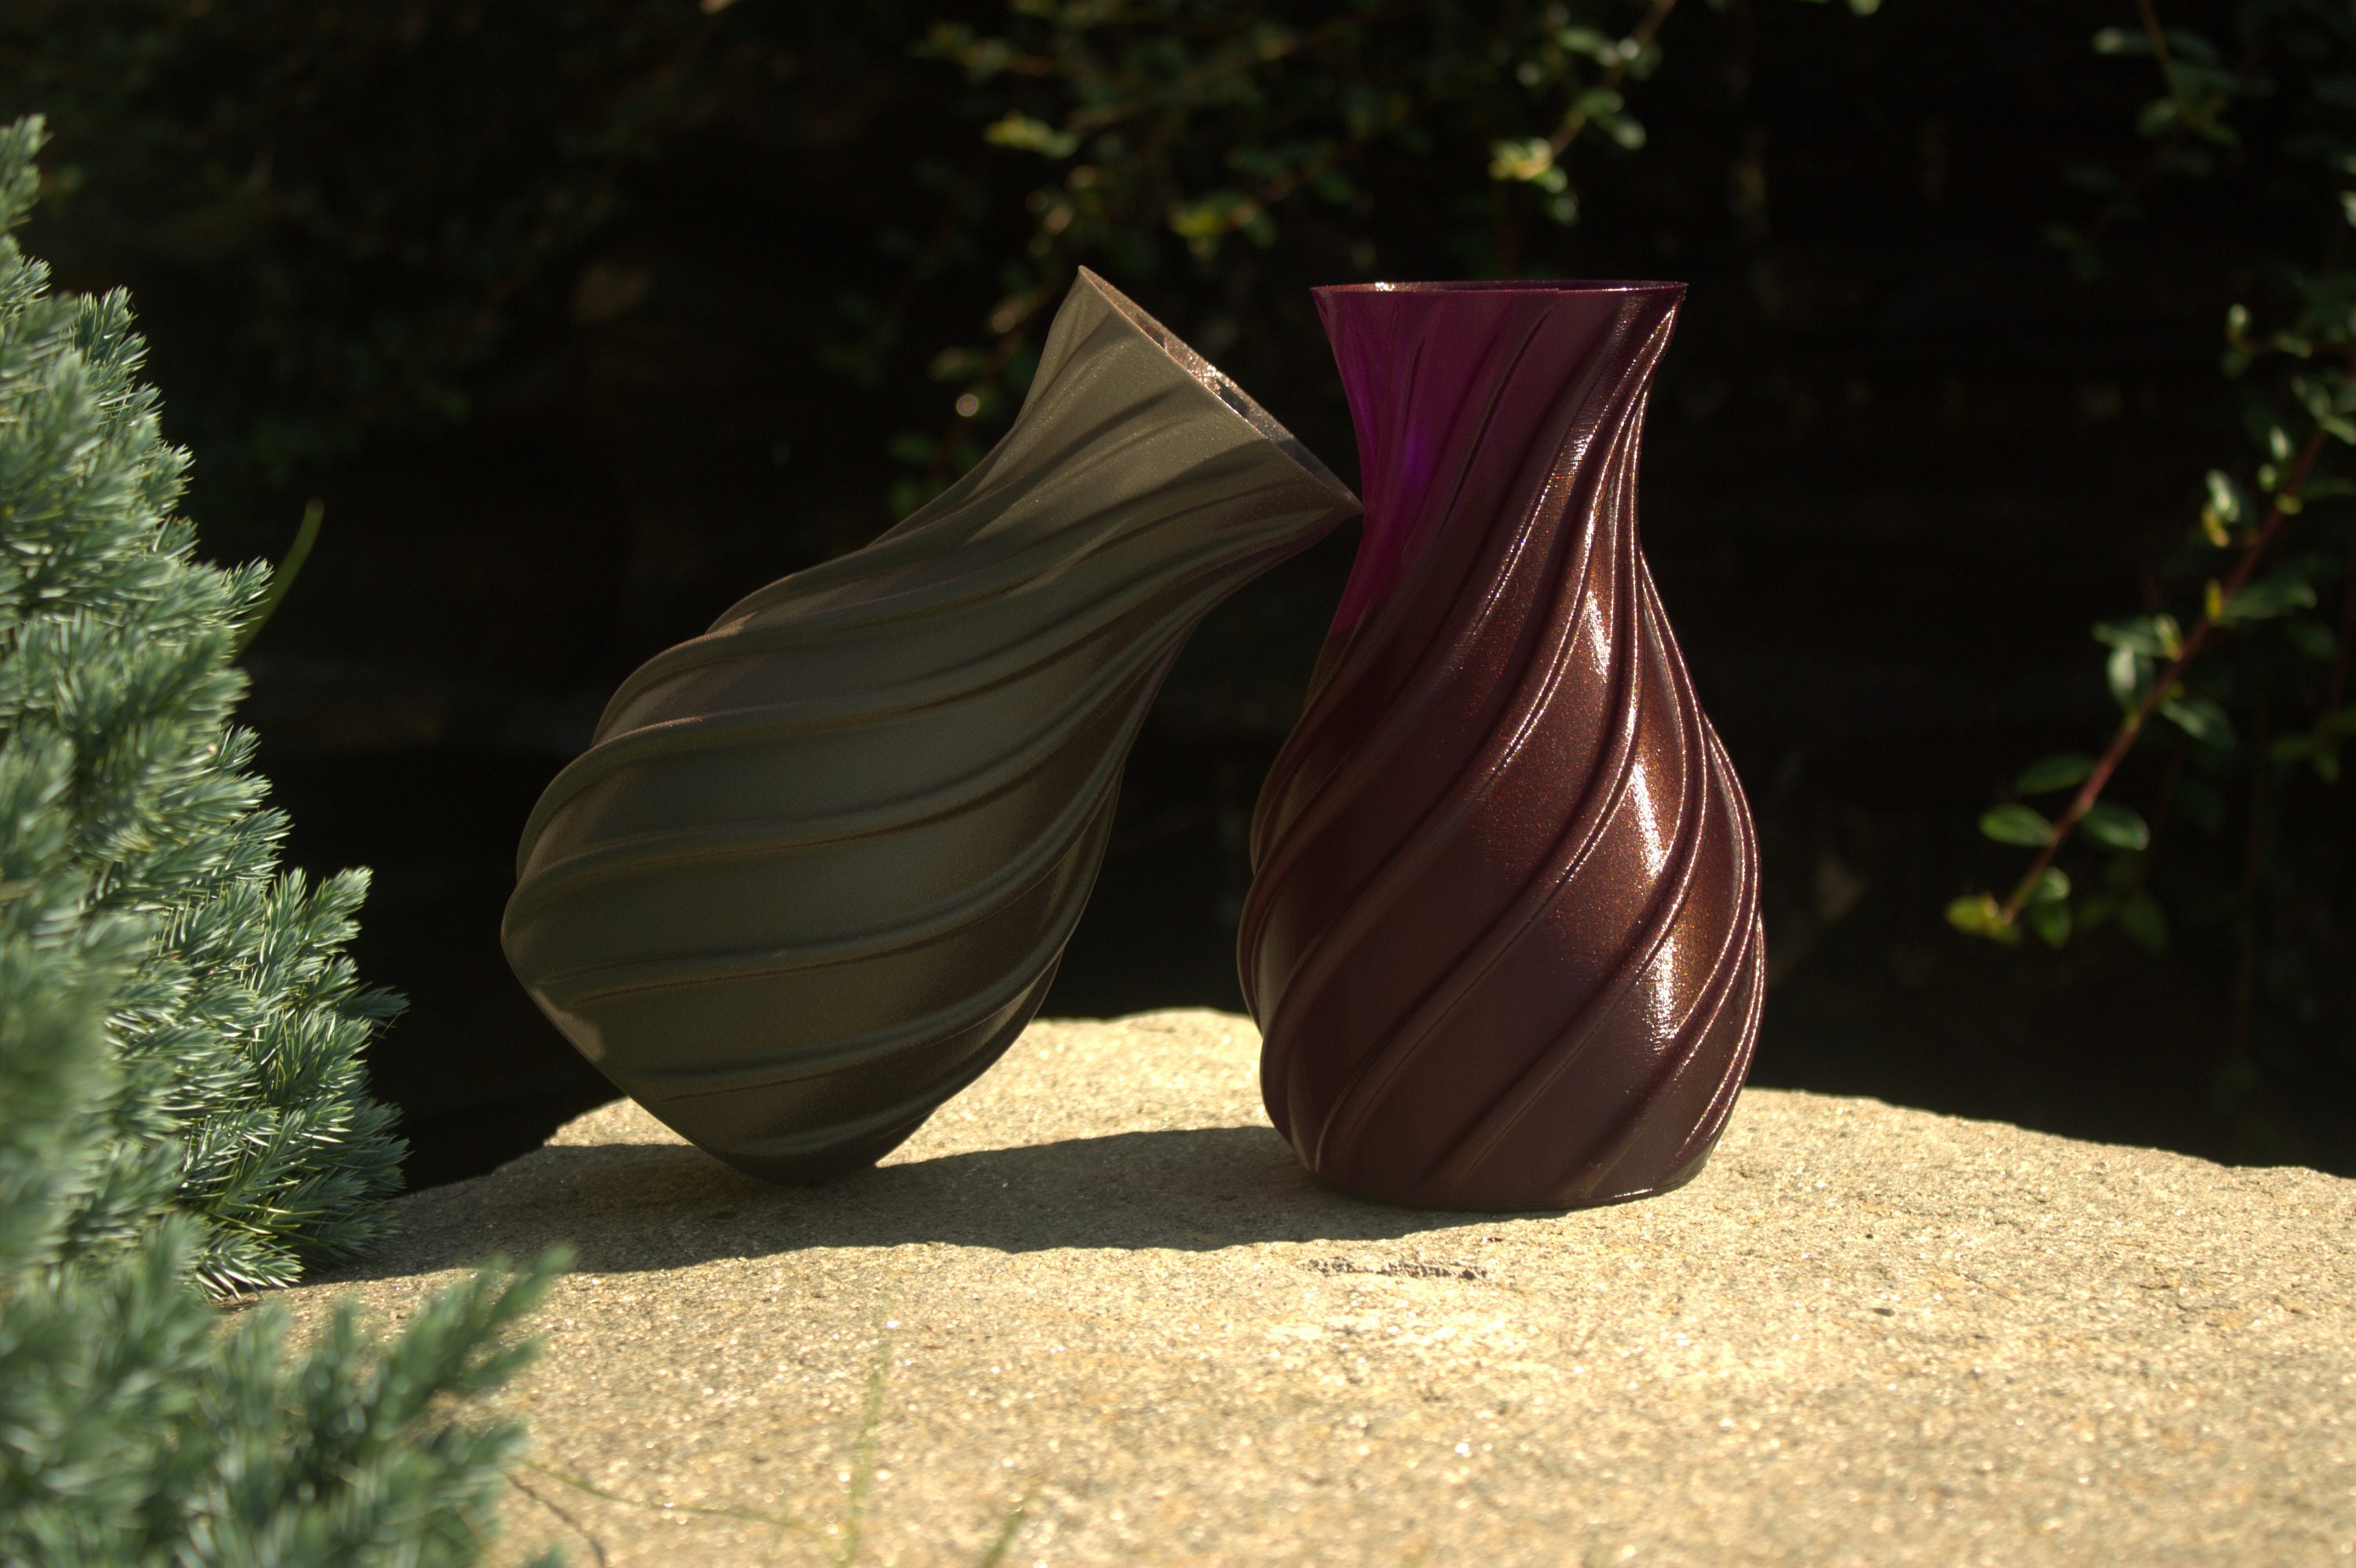 3D Printed Geometric Spiral Vase for Dried Flowers/ Futuristic Modern Shape Vase/ Fancy Centerpiece Decoration Object/Housewarming Art Deco